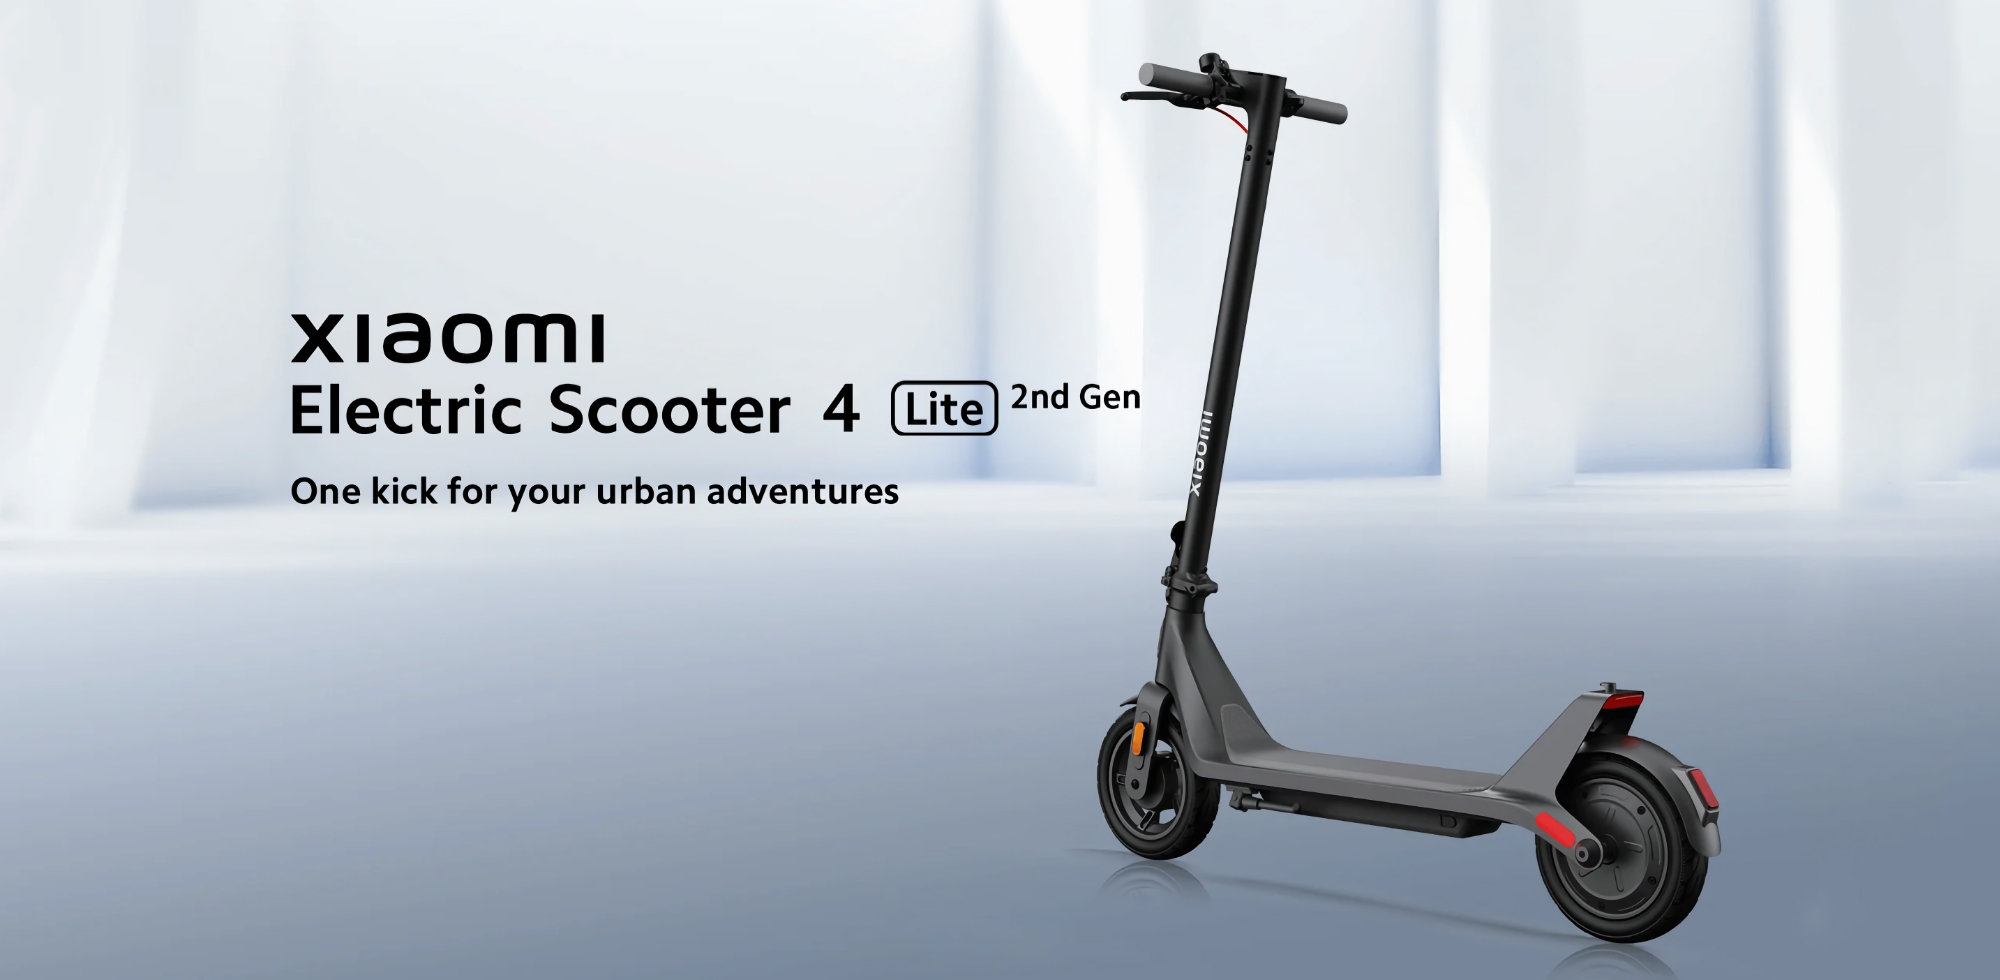 Xiaomi Electric Scooter 4 Lite (2nd Gen) із запасом ходу до 25 км дебютував у Європі